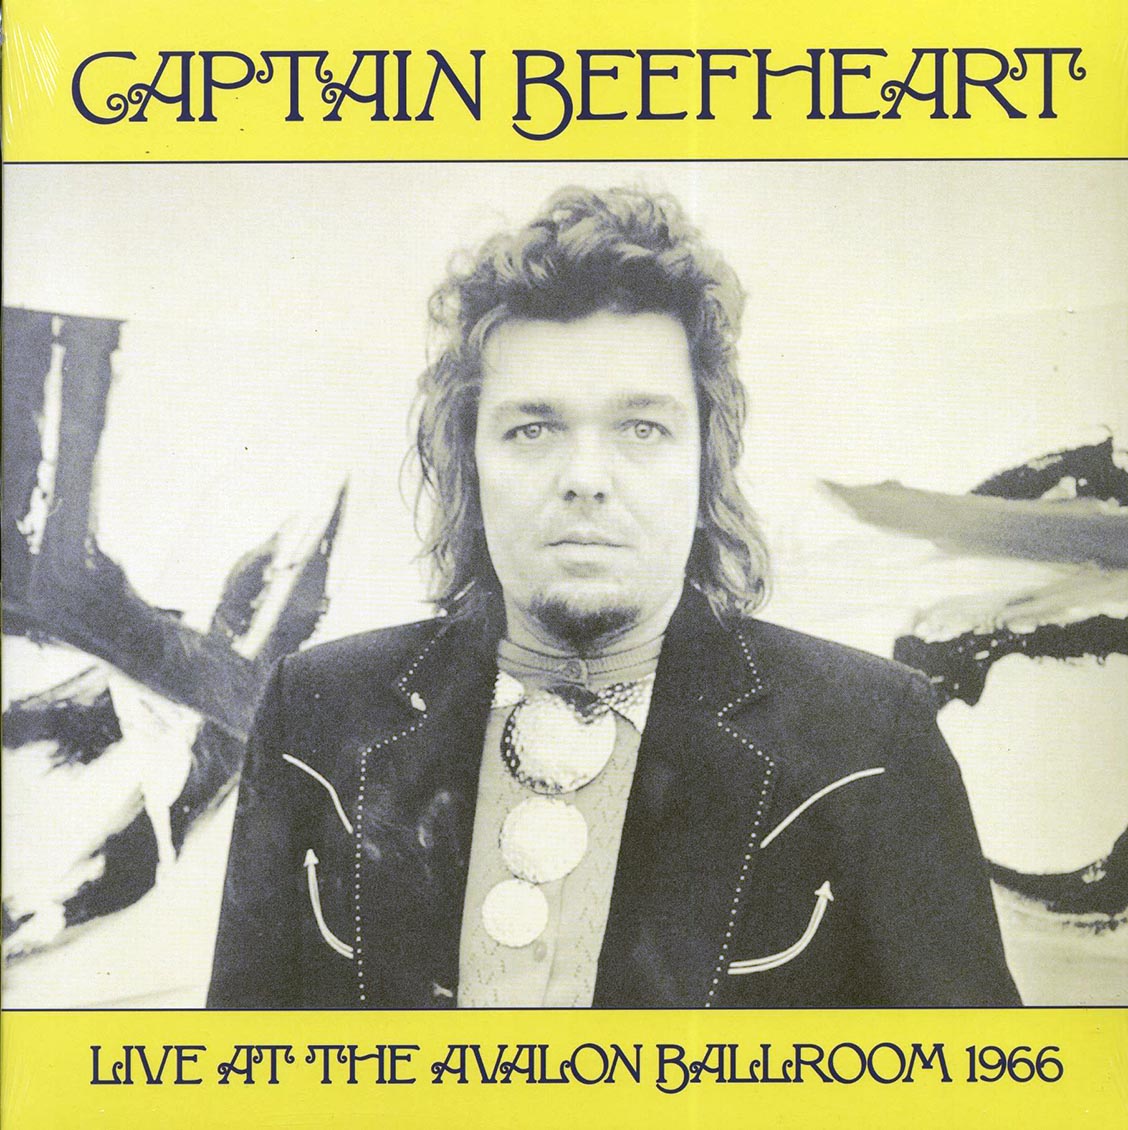 Captain Beefheart - Live At The Avalon Ballroom 1966 (ltd. 500 copies made) - Vinyl LP